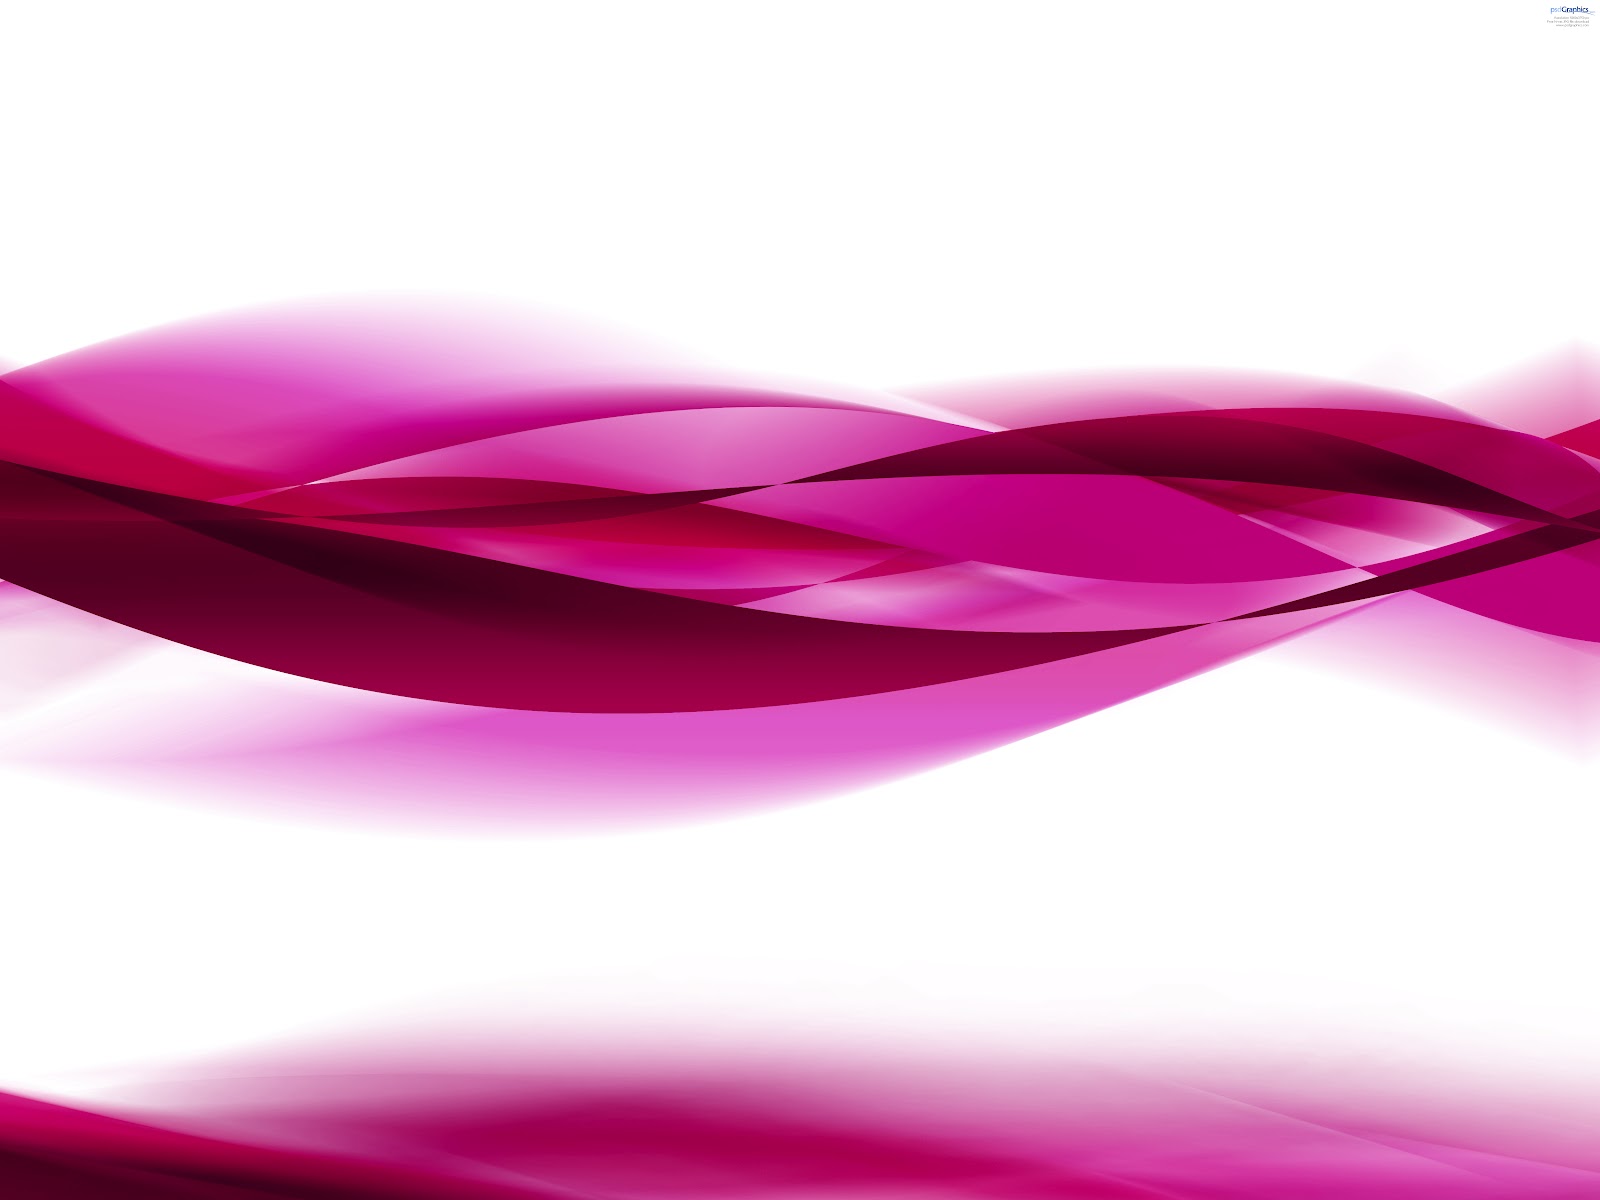 background wallpaper for photoshop,pink,red,magenta,purple,violet